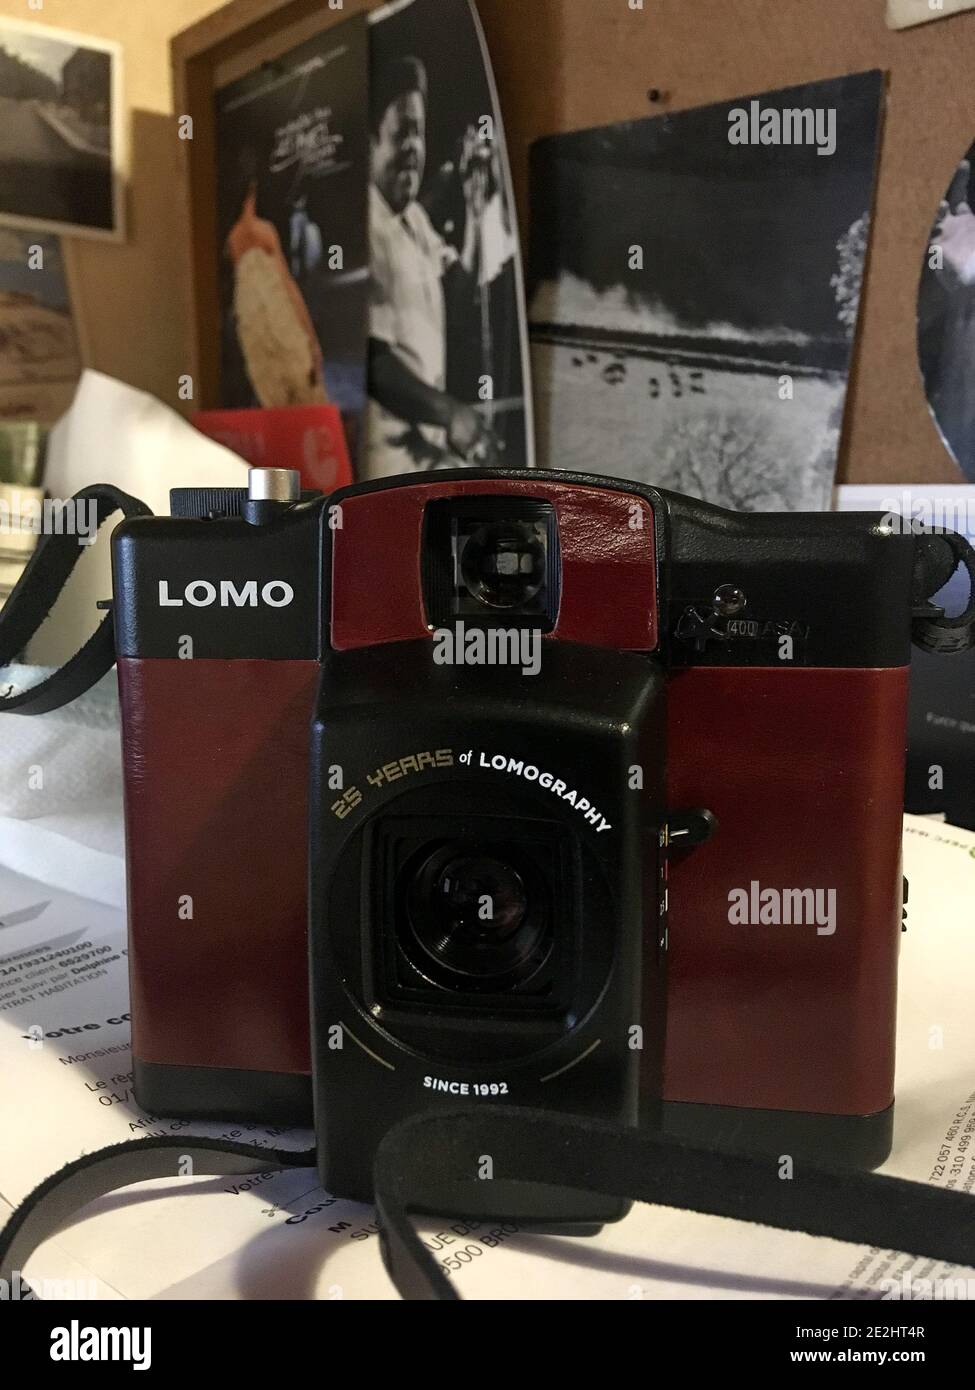 Lomo LCA 120 wide analogic camera, 25th anniversary limited edition, France Stock Photo